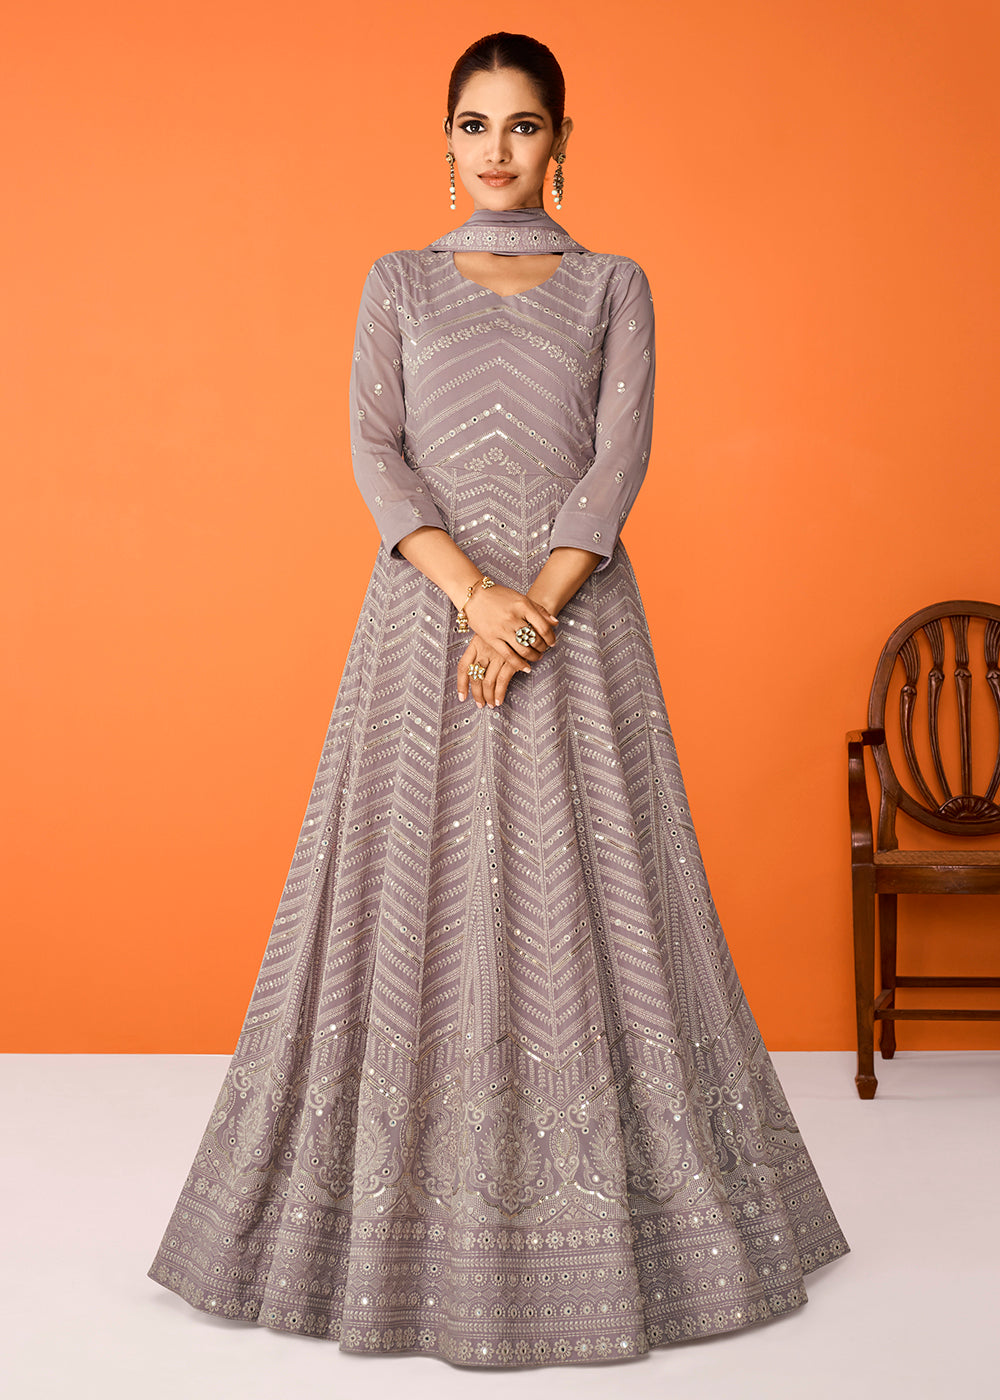 Buy Now Grey Wedding Festive Special Georgette Anarkali Suit Online in USA, UK, Australia, New Zealand, Canada & Worldwide at Empress Clothing. 